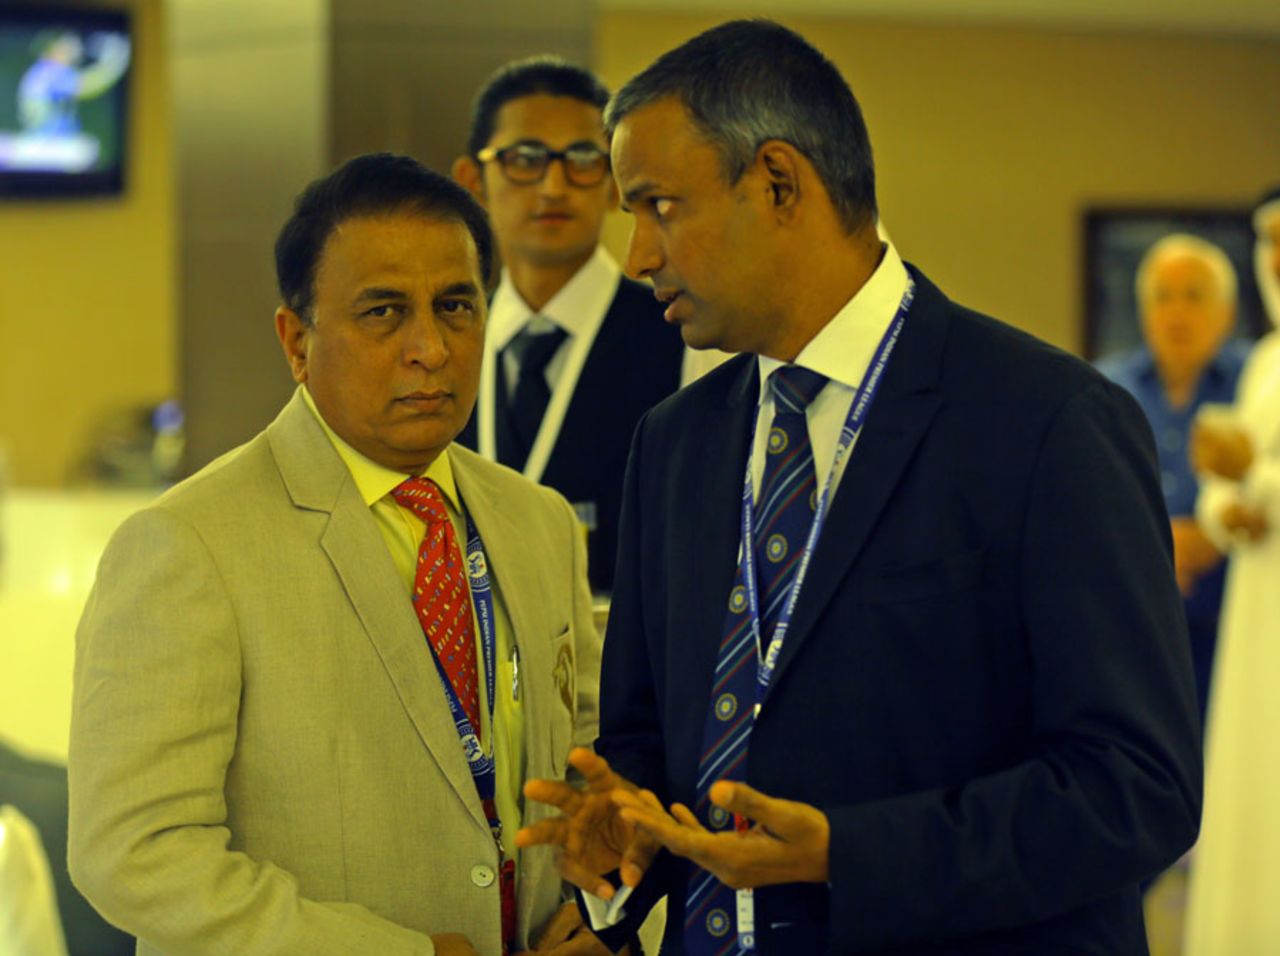 Sunil Gavaskar and IPL COO Sundar Raman at a match, IPL 2014, Dubai, April 30, 2014